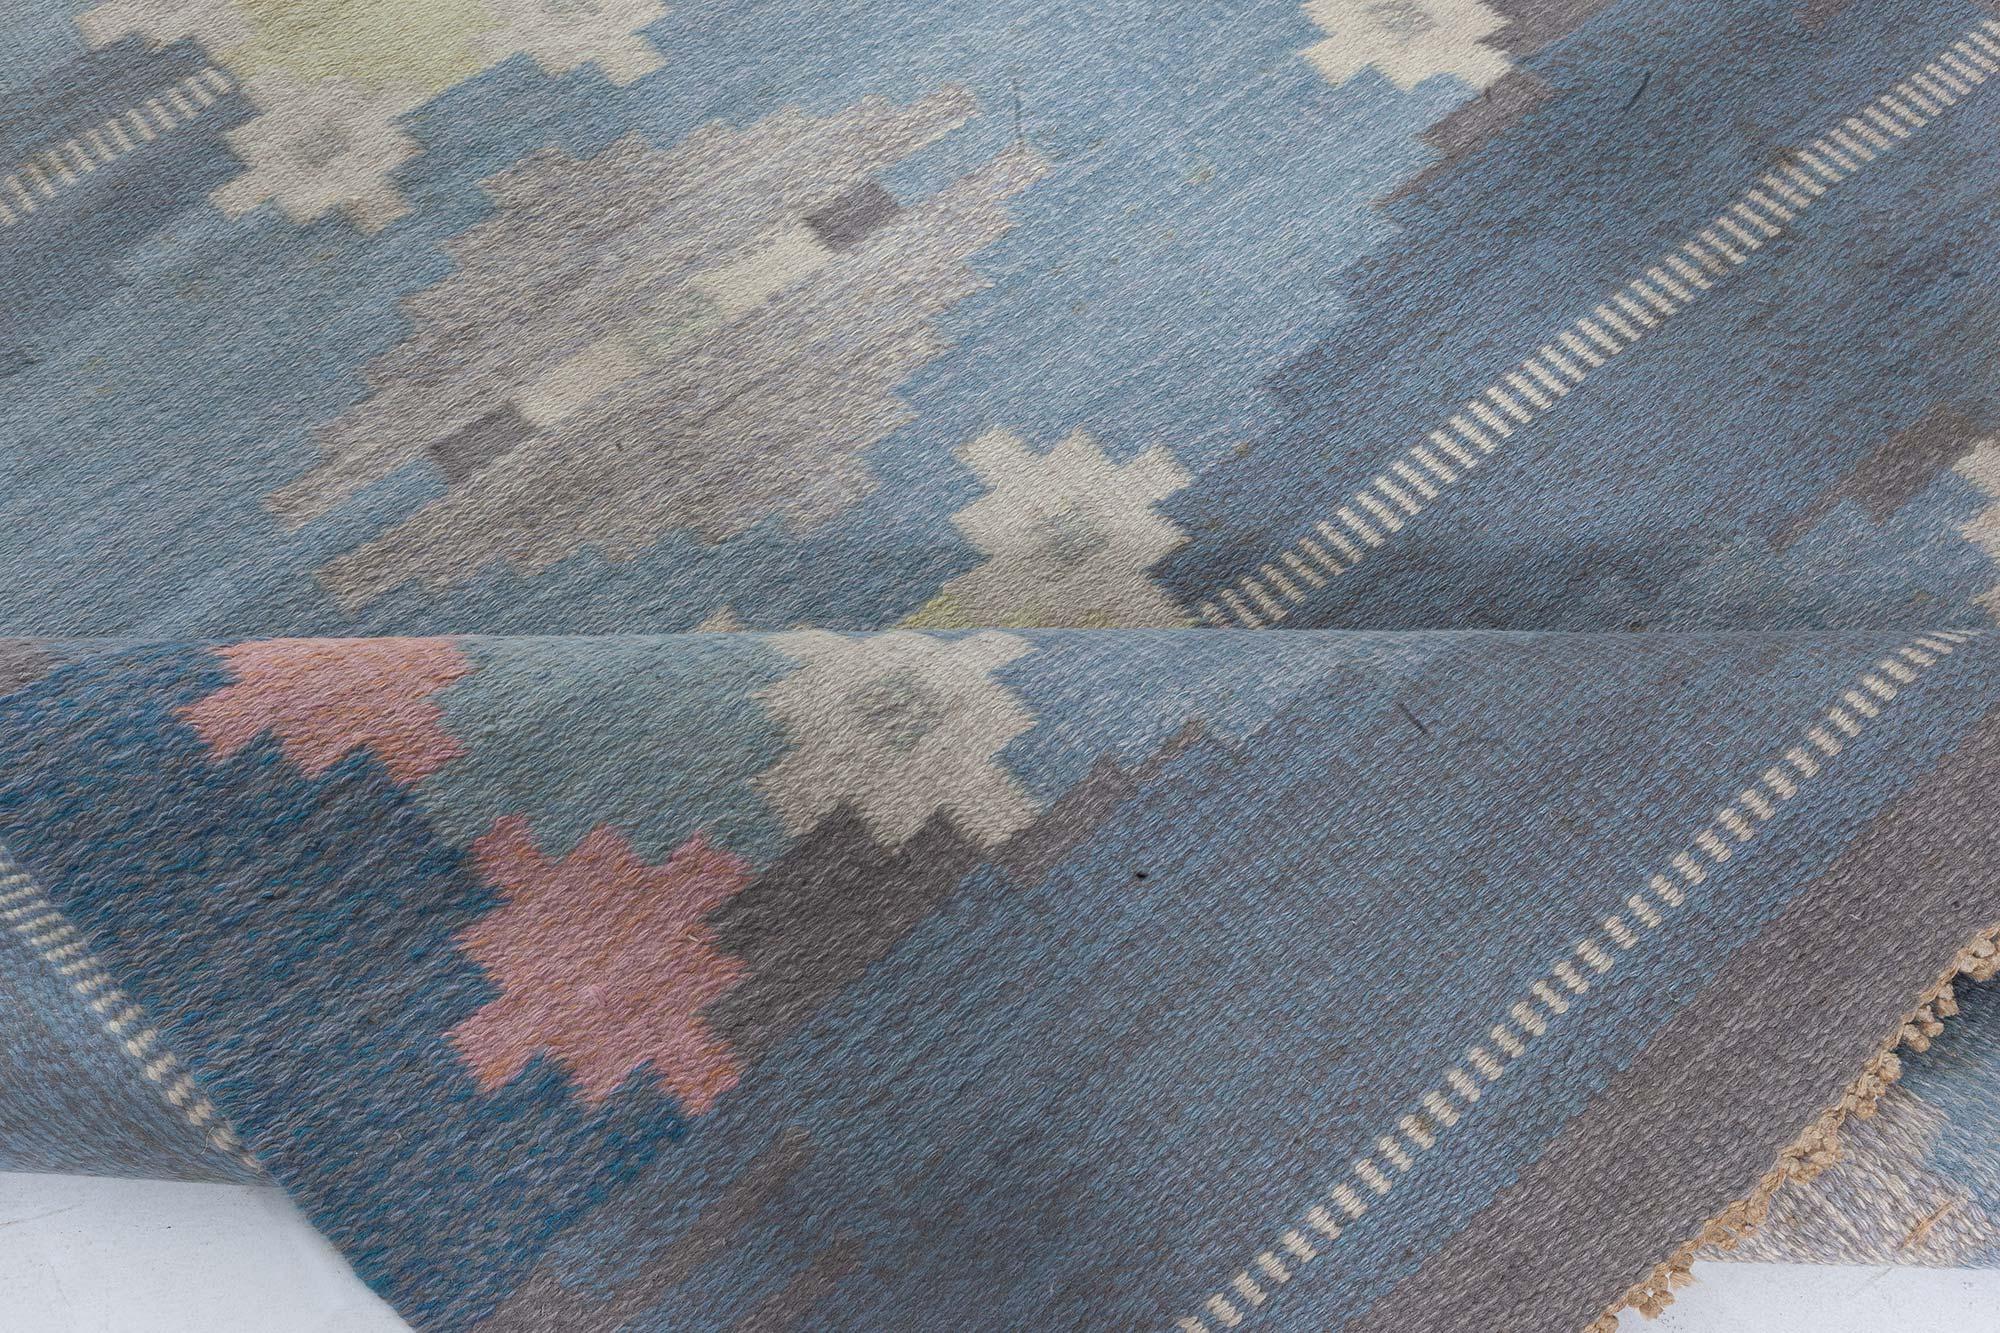 Vintage flat woven rug by Ingegerd Silow
Size: 4.7